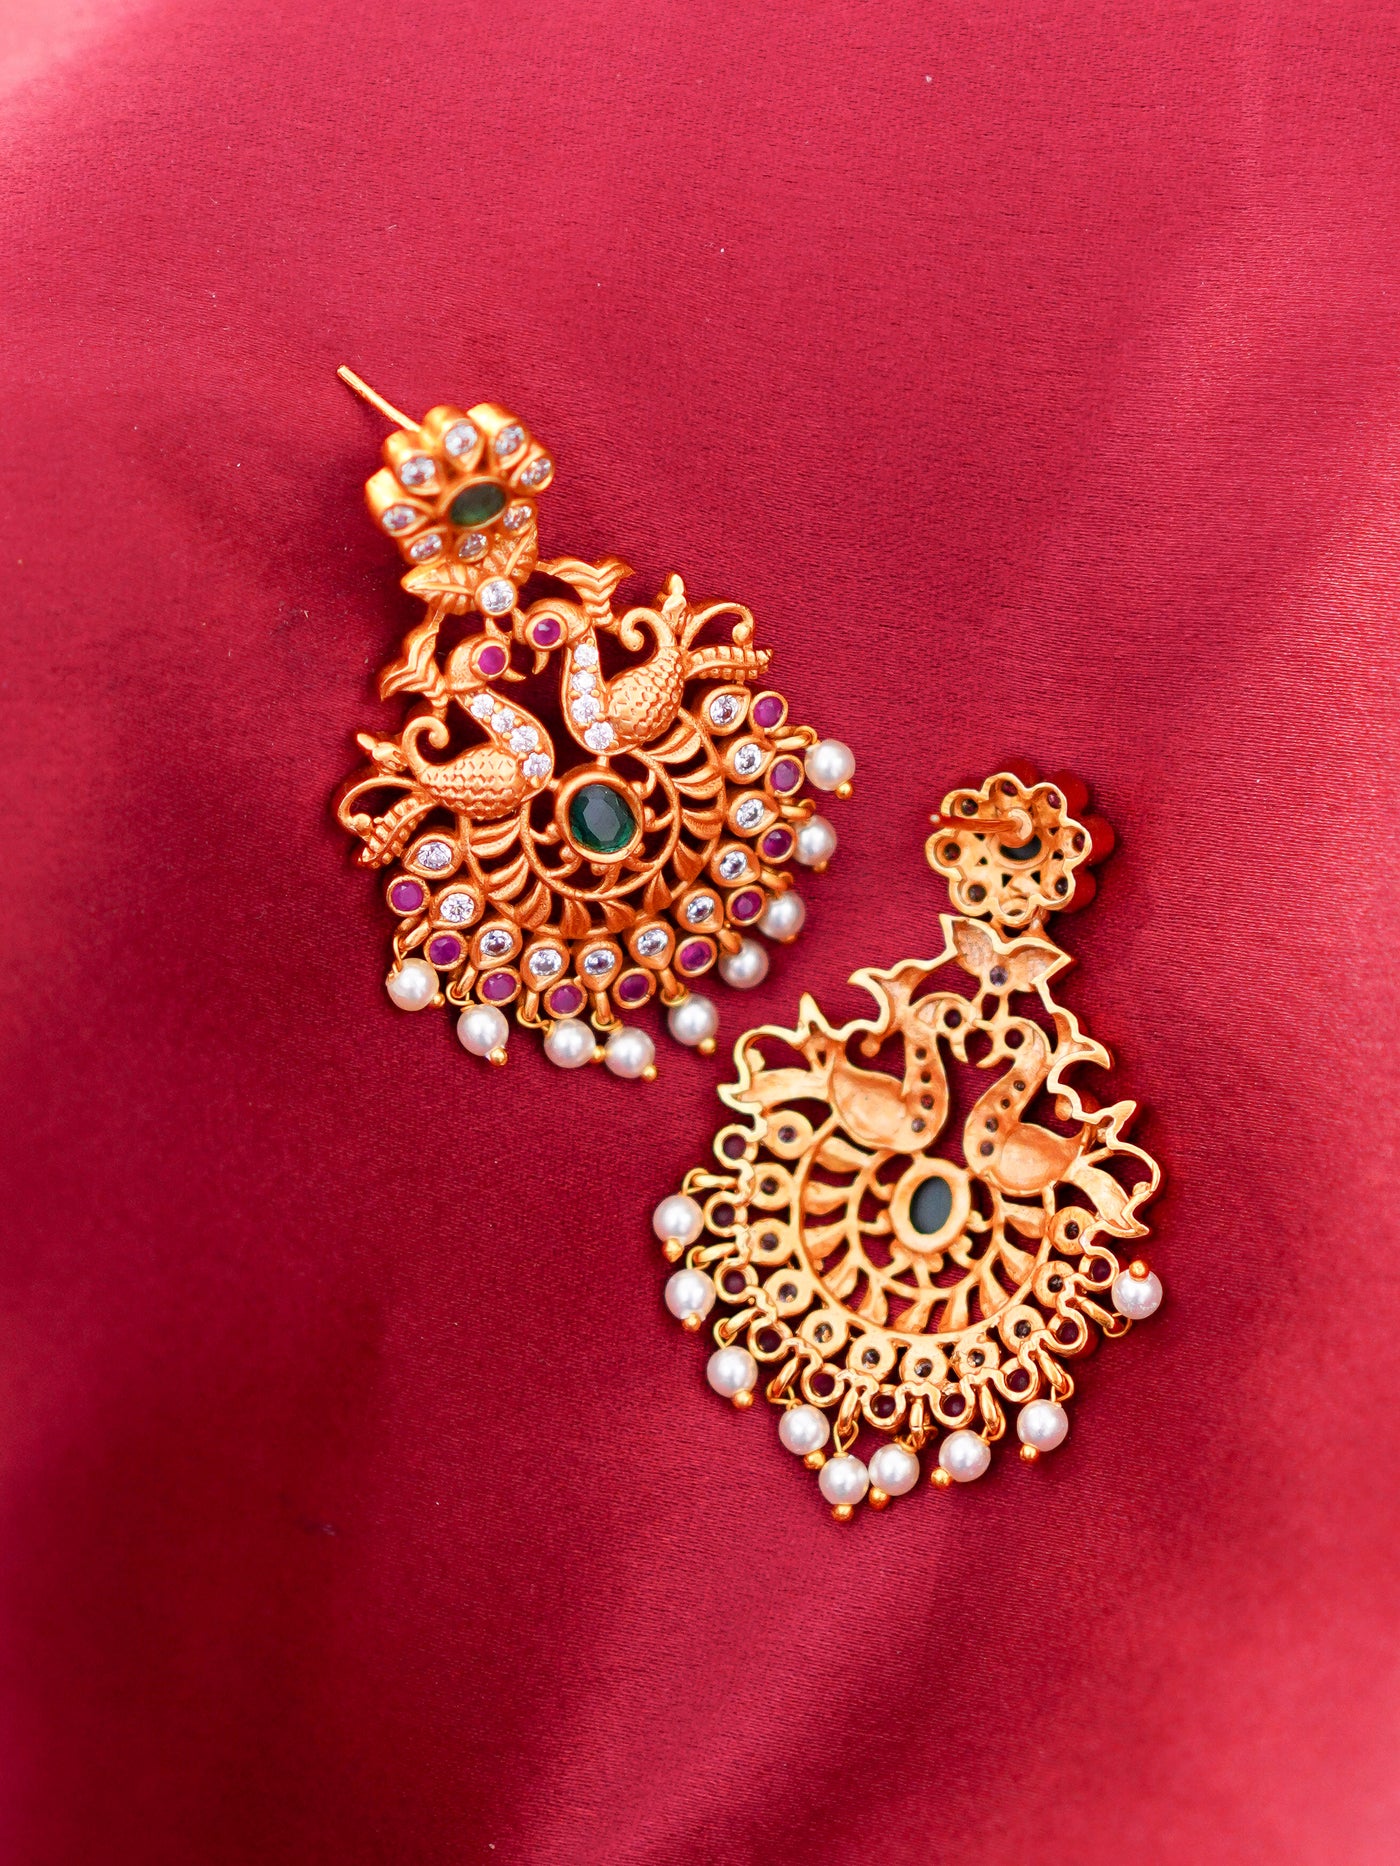 Peacock chandbalis wiyh pearl dangles, Temple Earrings, peacock earrings